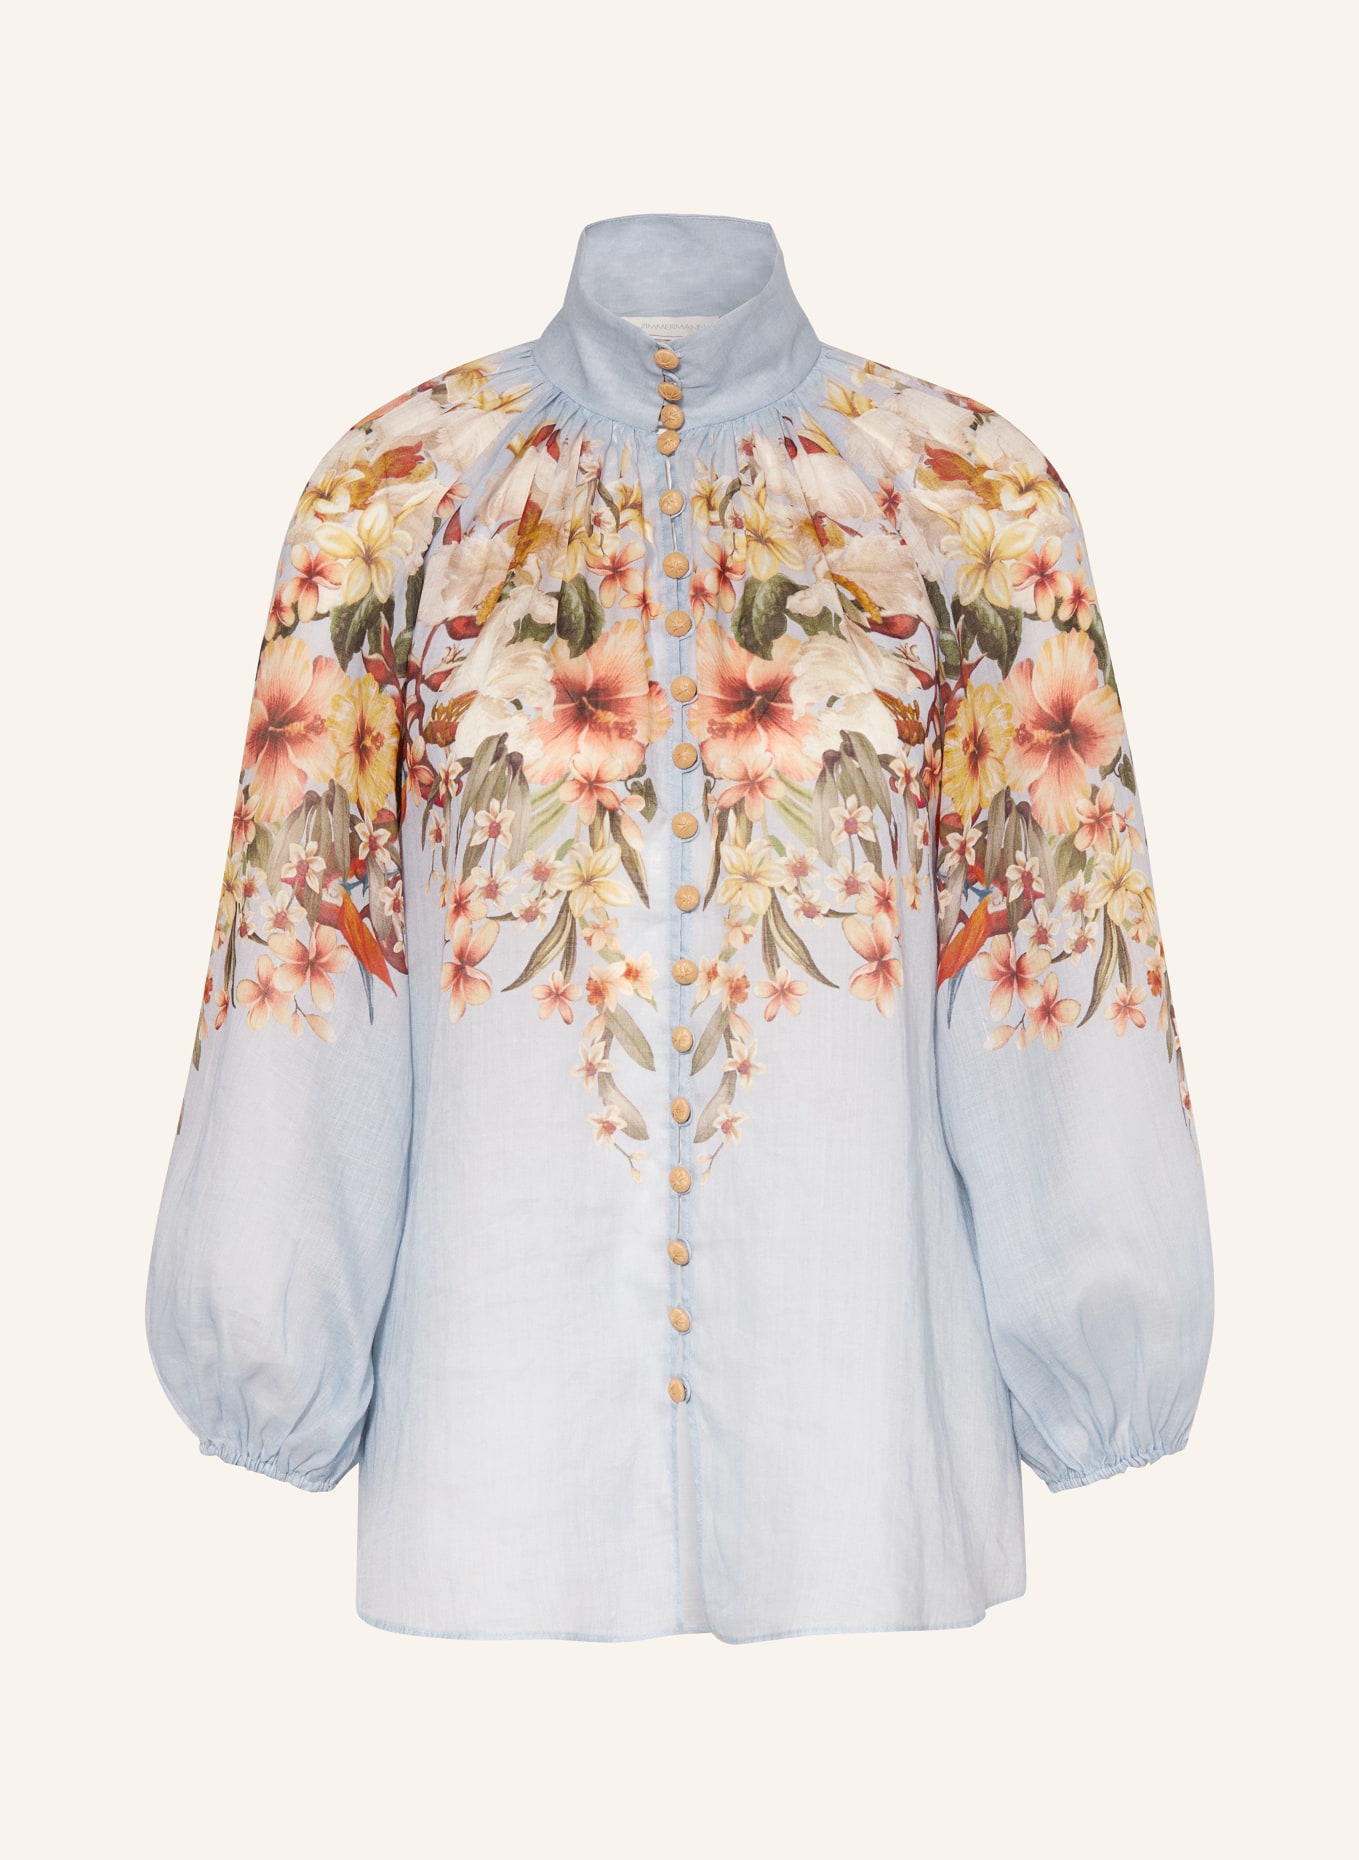 ZIMMERMANN Bluse LEXI BILLOW mit 3/4-Arm, Farbe: HELLBLAU/ DUNKELORANGE/ GRÜN (Bild 1)